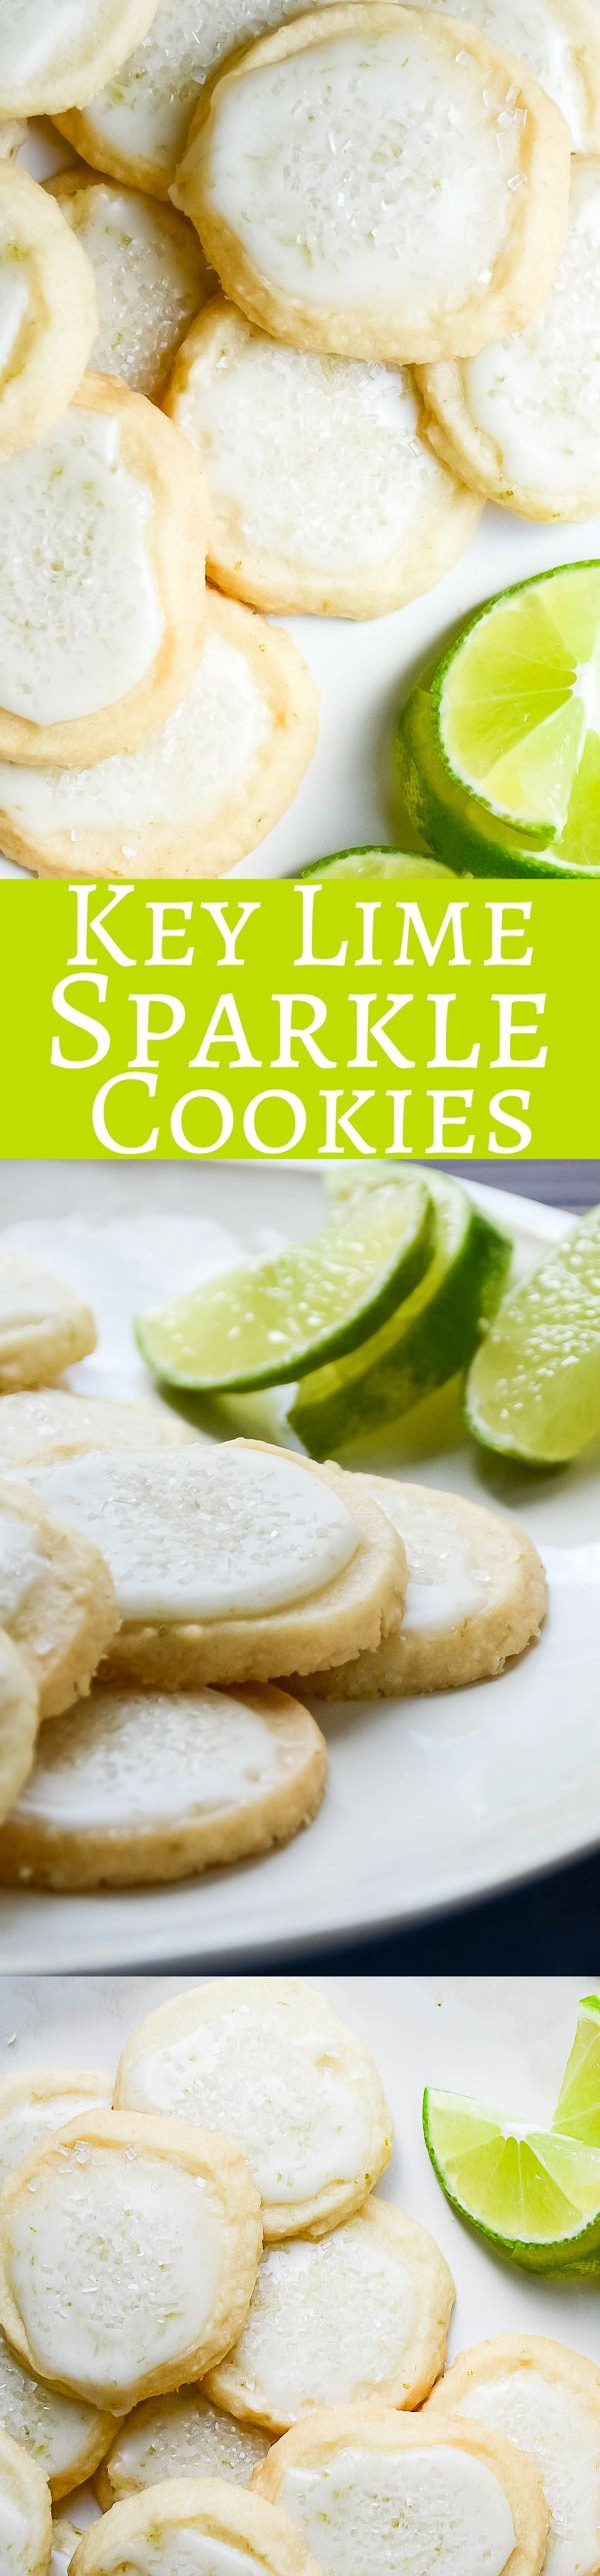 Key Lime Sparkle Cookies